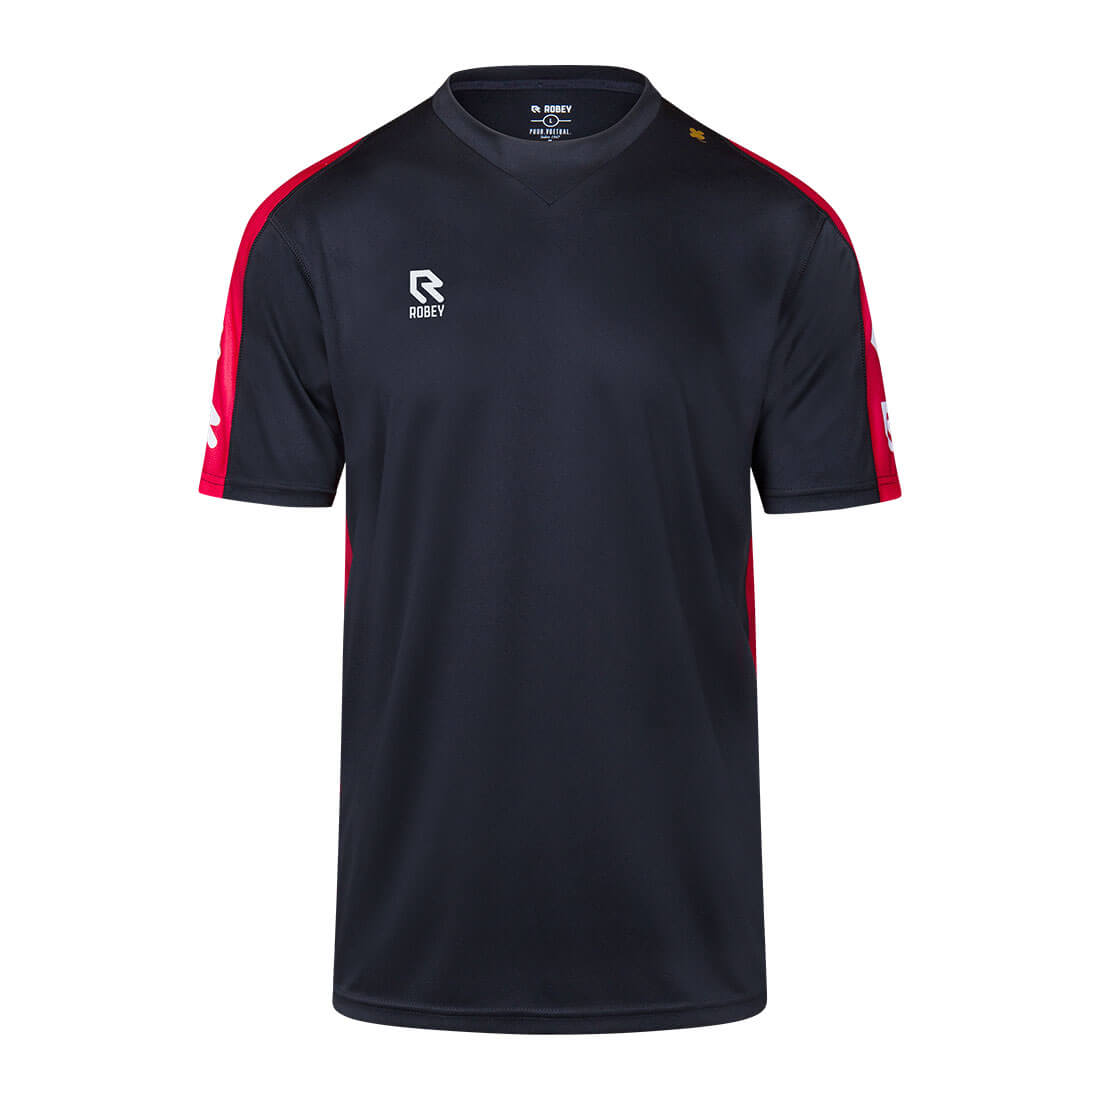 Robey Performance Shirt - Black Red